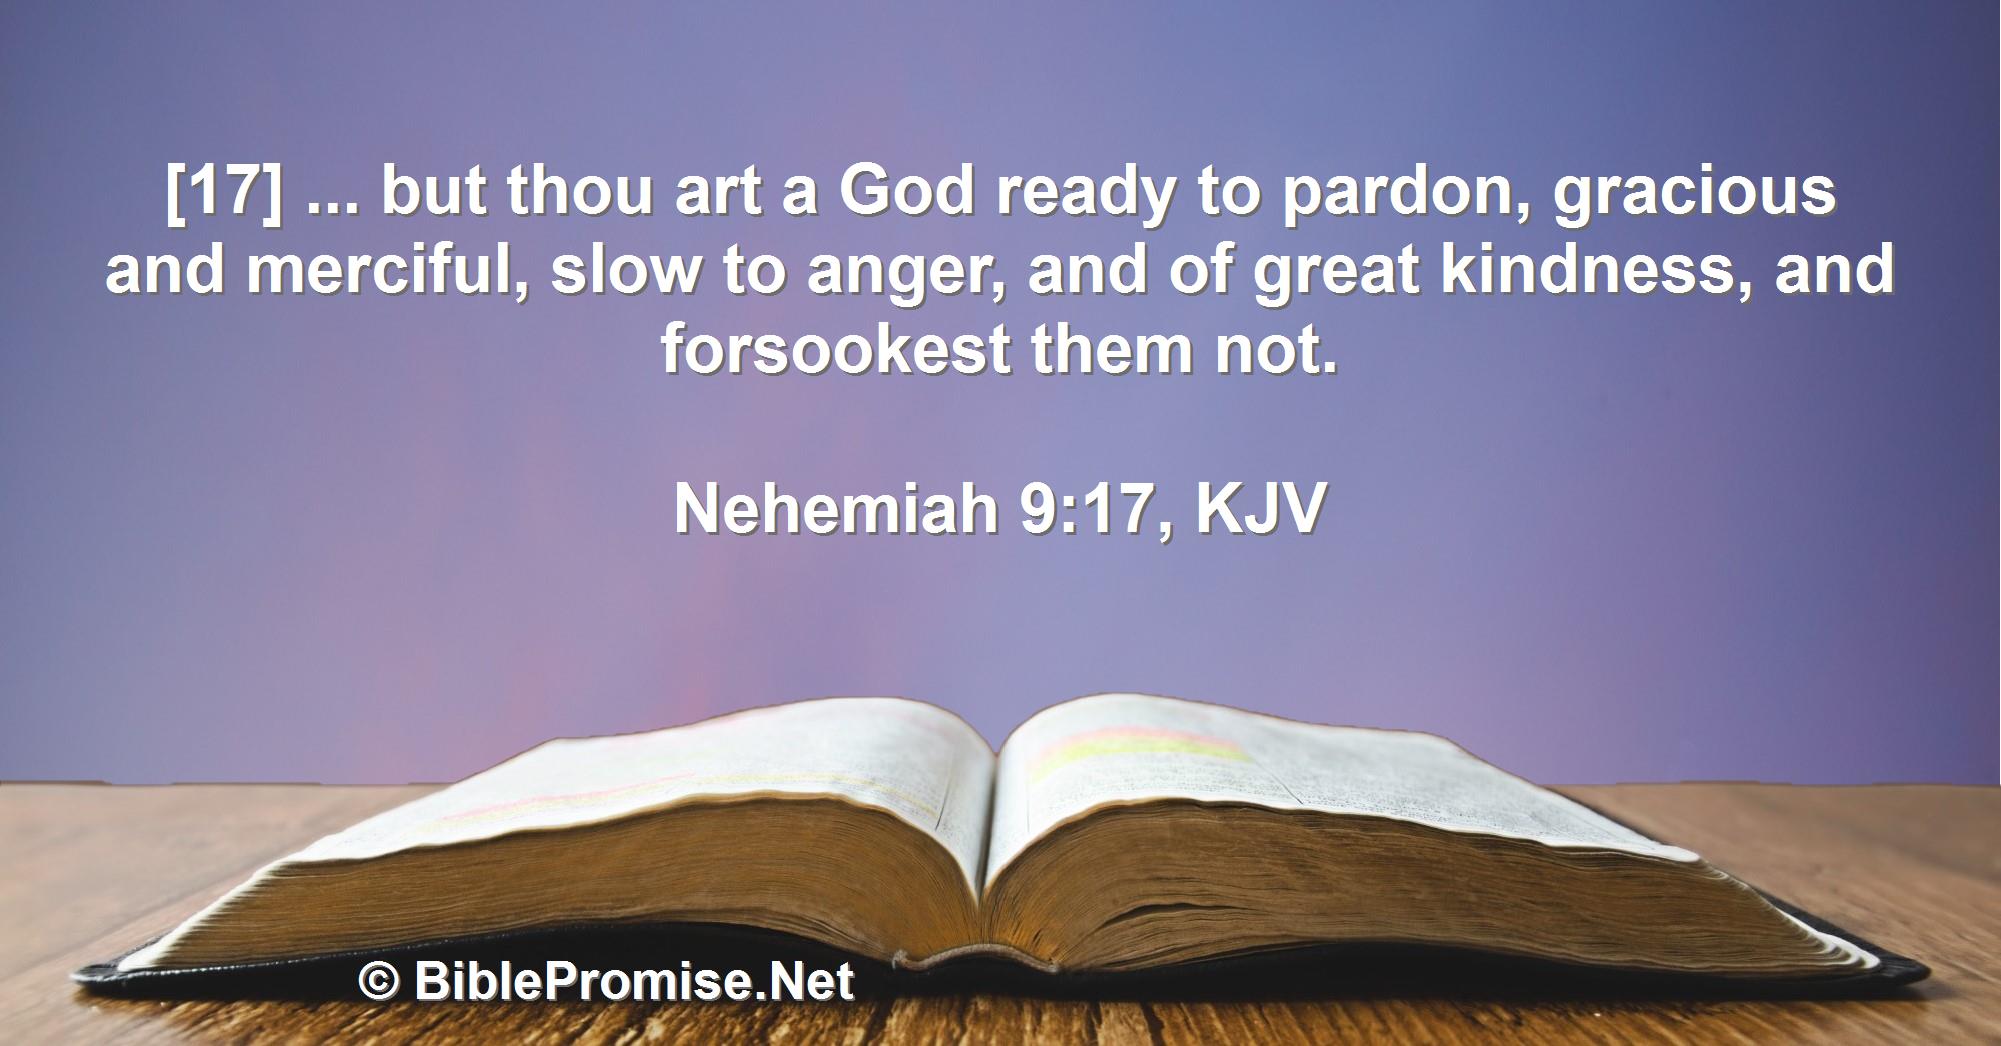 Thursday, September 22, 2022 - Nehemiah 9:17 (KJV) - Bible promise that God is ready to pardon, gracious and merciful, slow to anger, abundant in kindness.